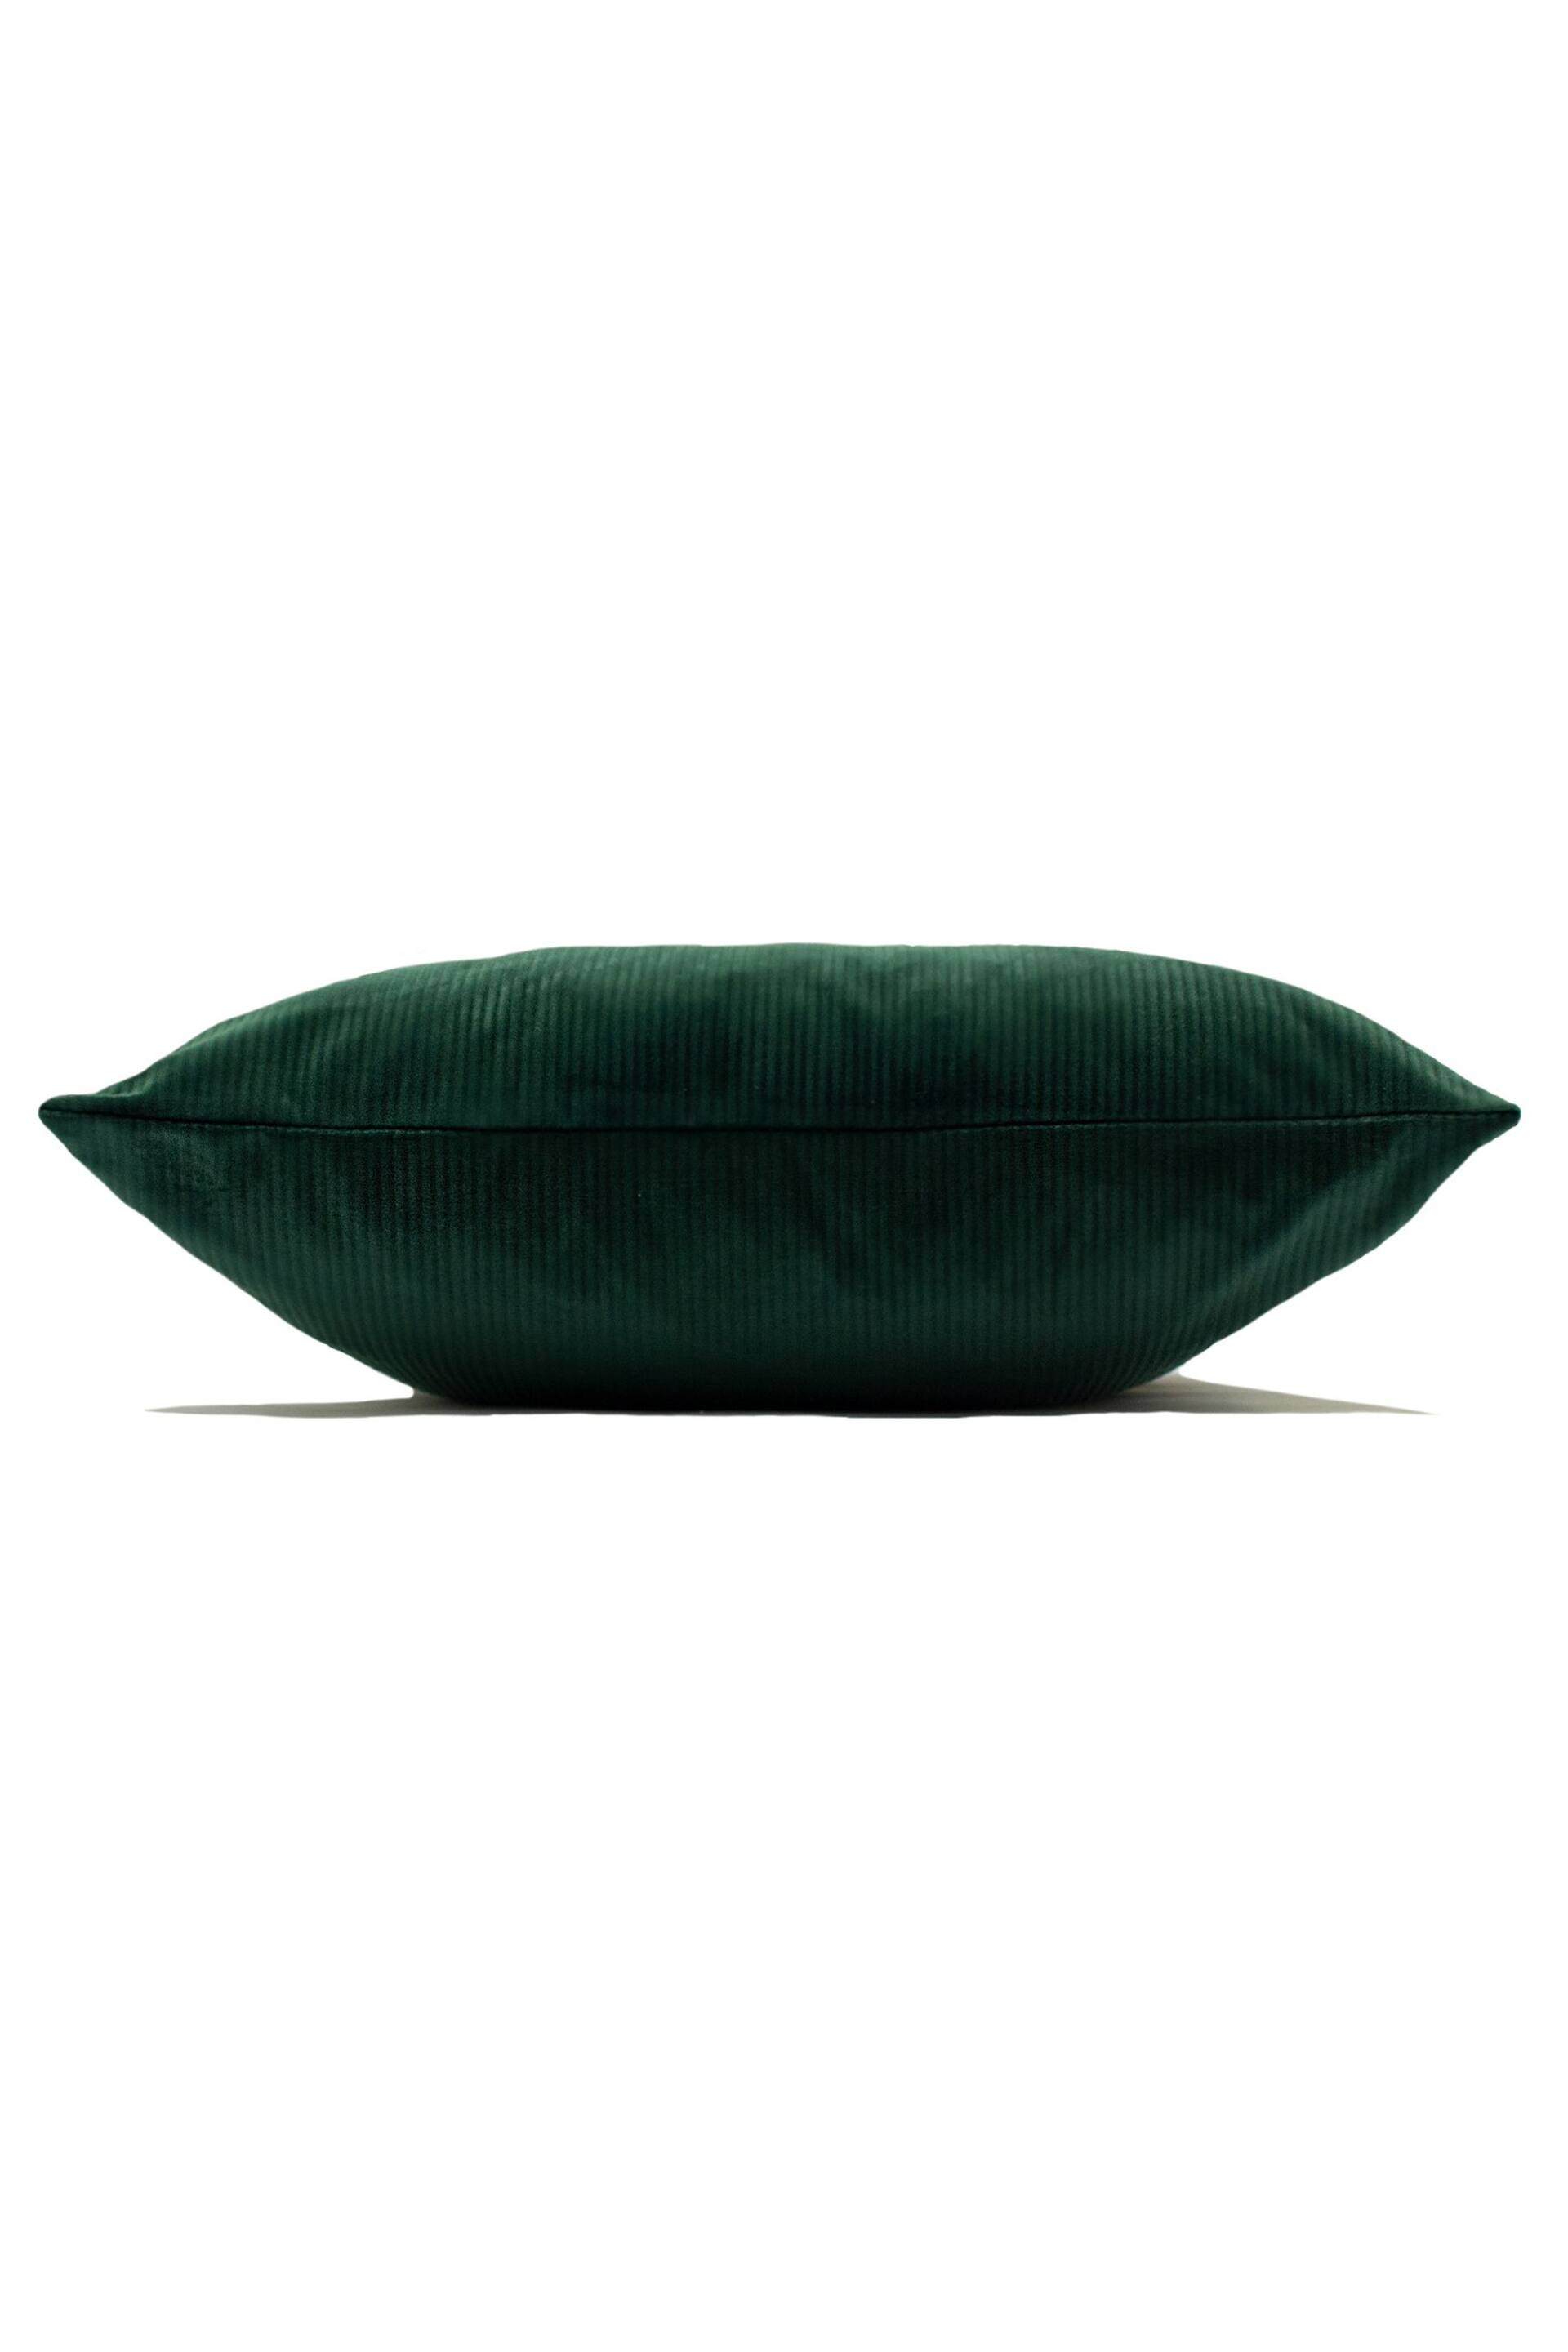 furn. 2 Pack Green Aurora Filled Cushions - Image 2 of 4